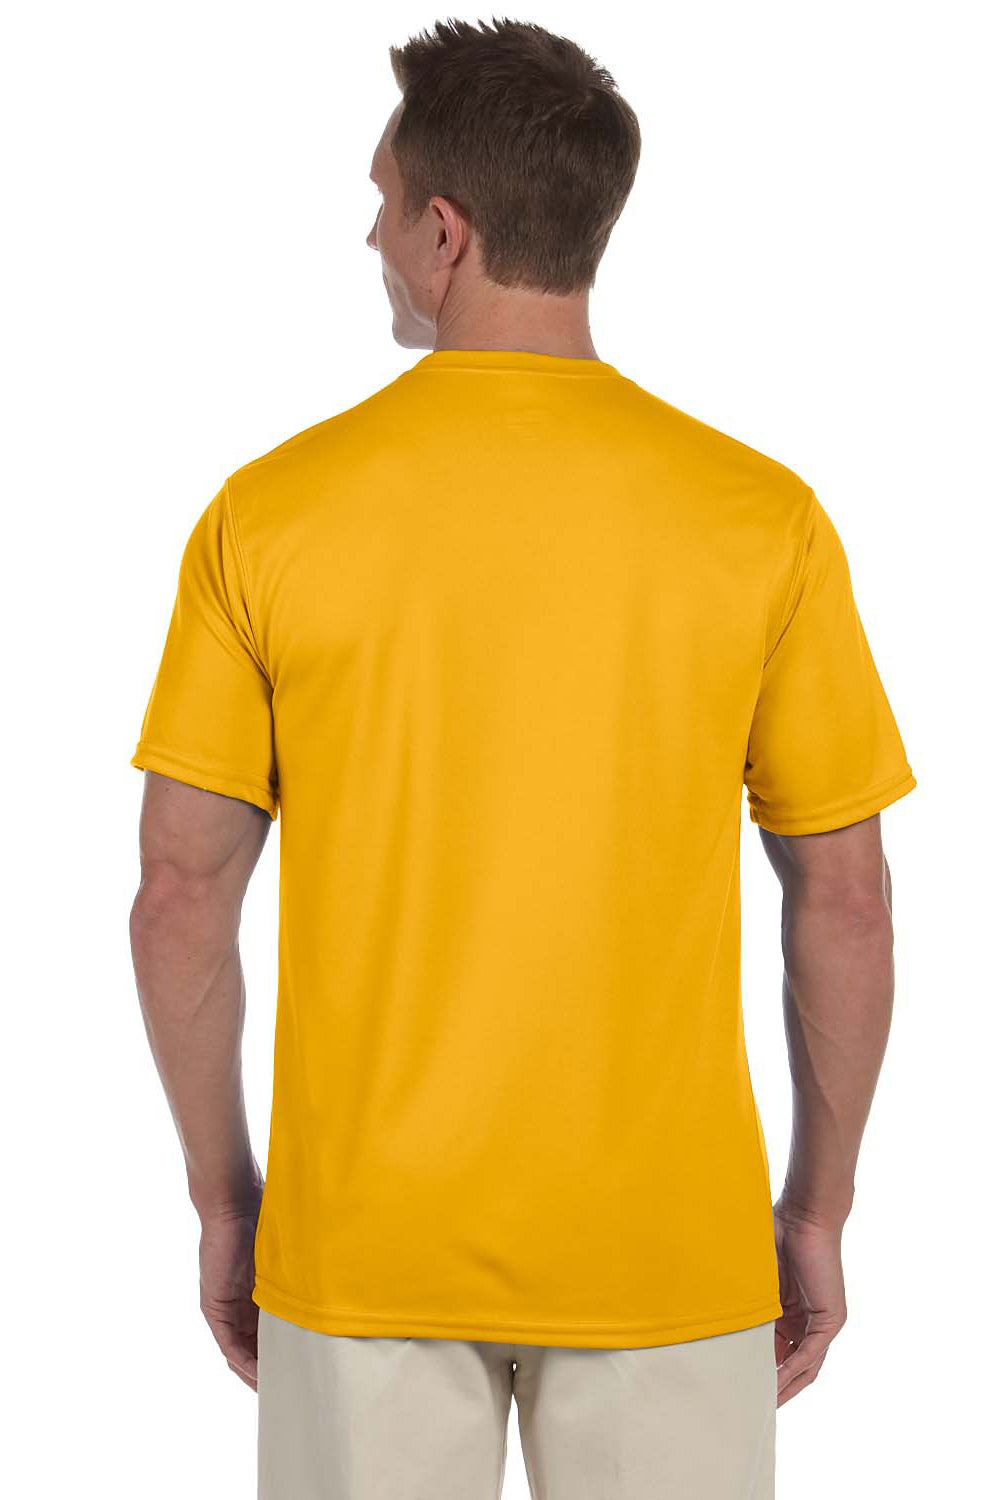 Augusta Sportswear 790 Mens Moisture Wicking Short Sleeve Crewneck T-Shirt Gold Model Back